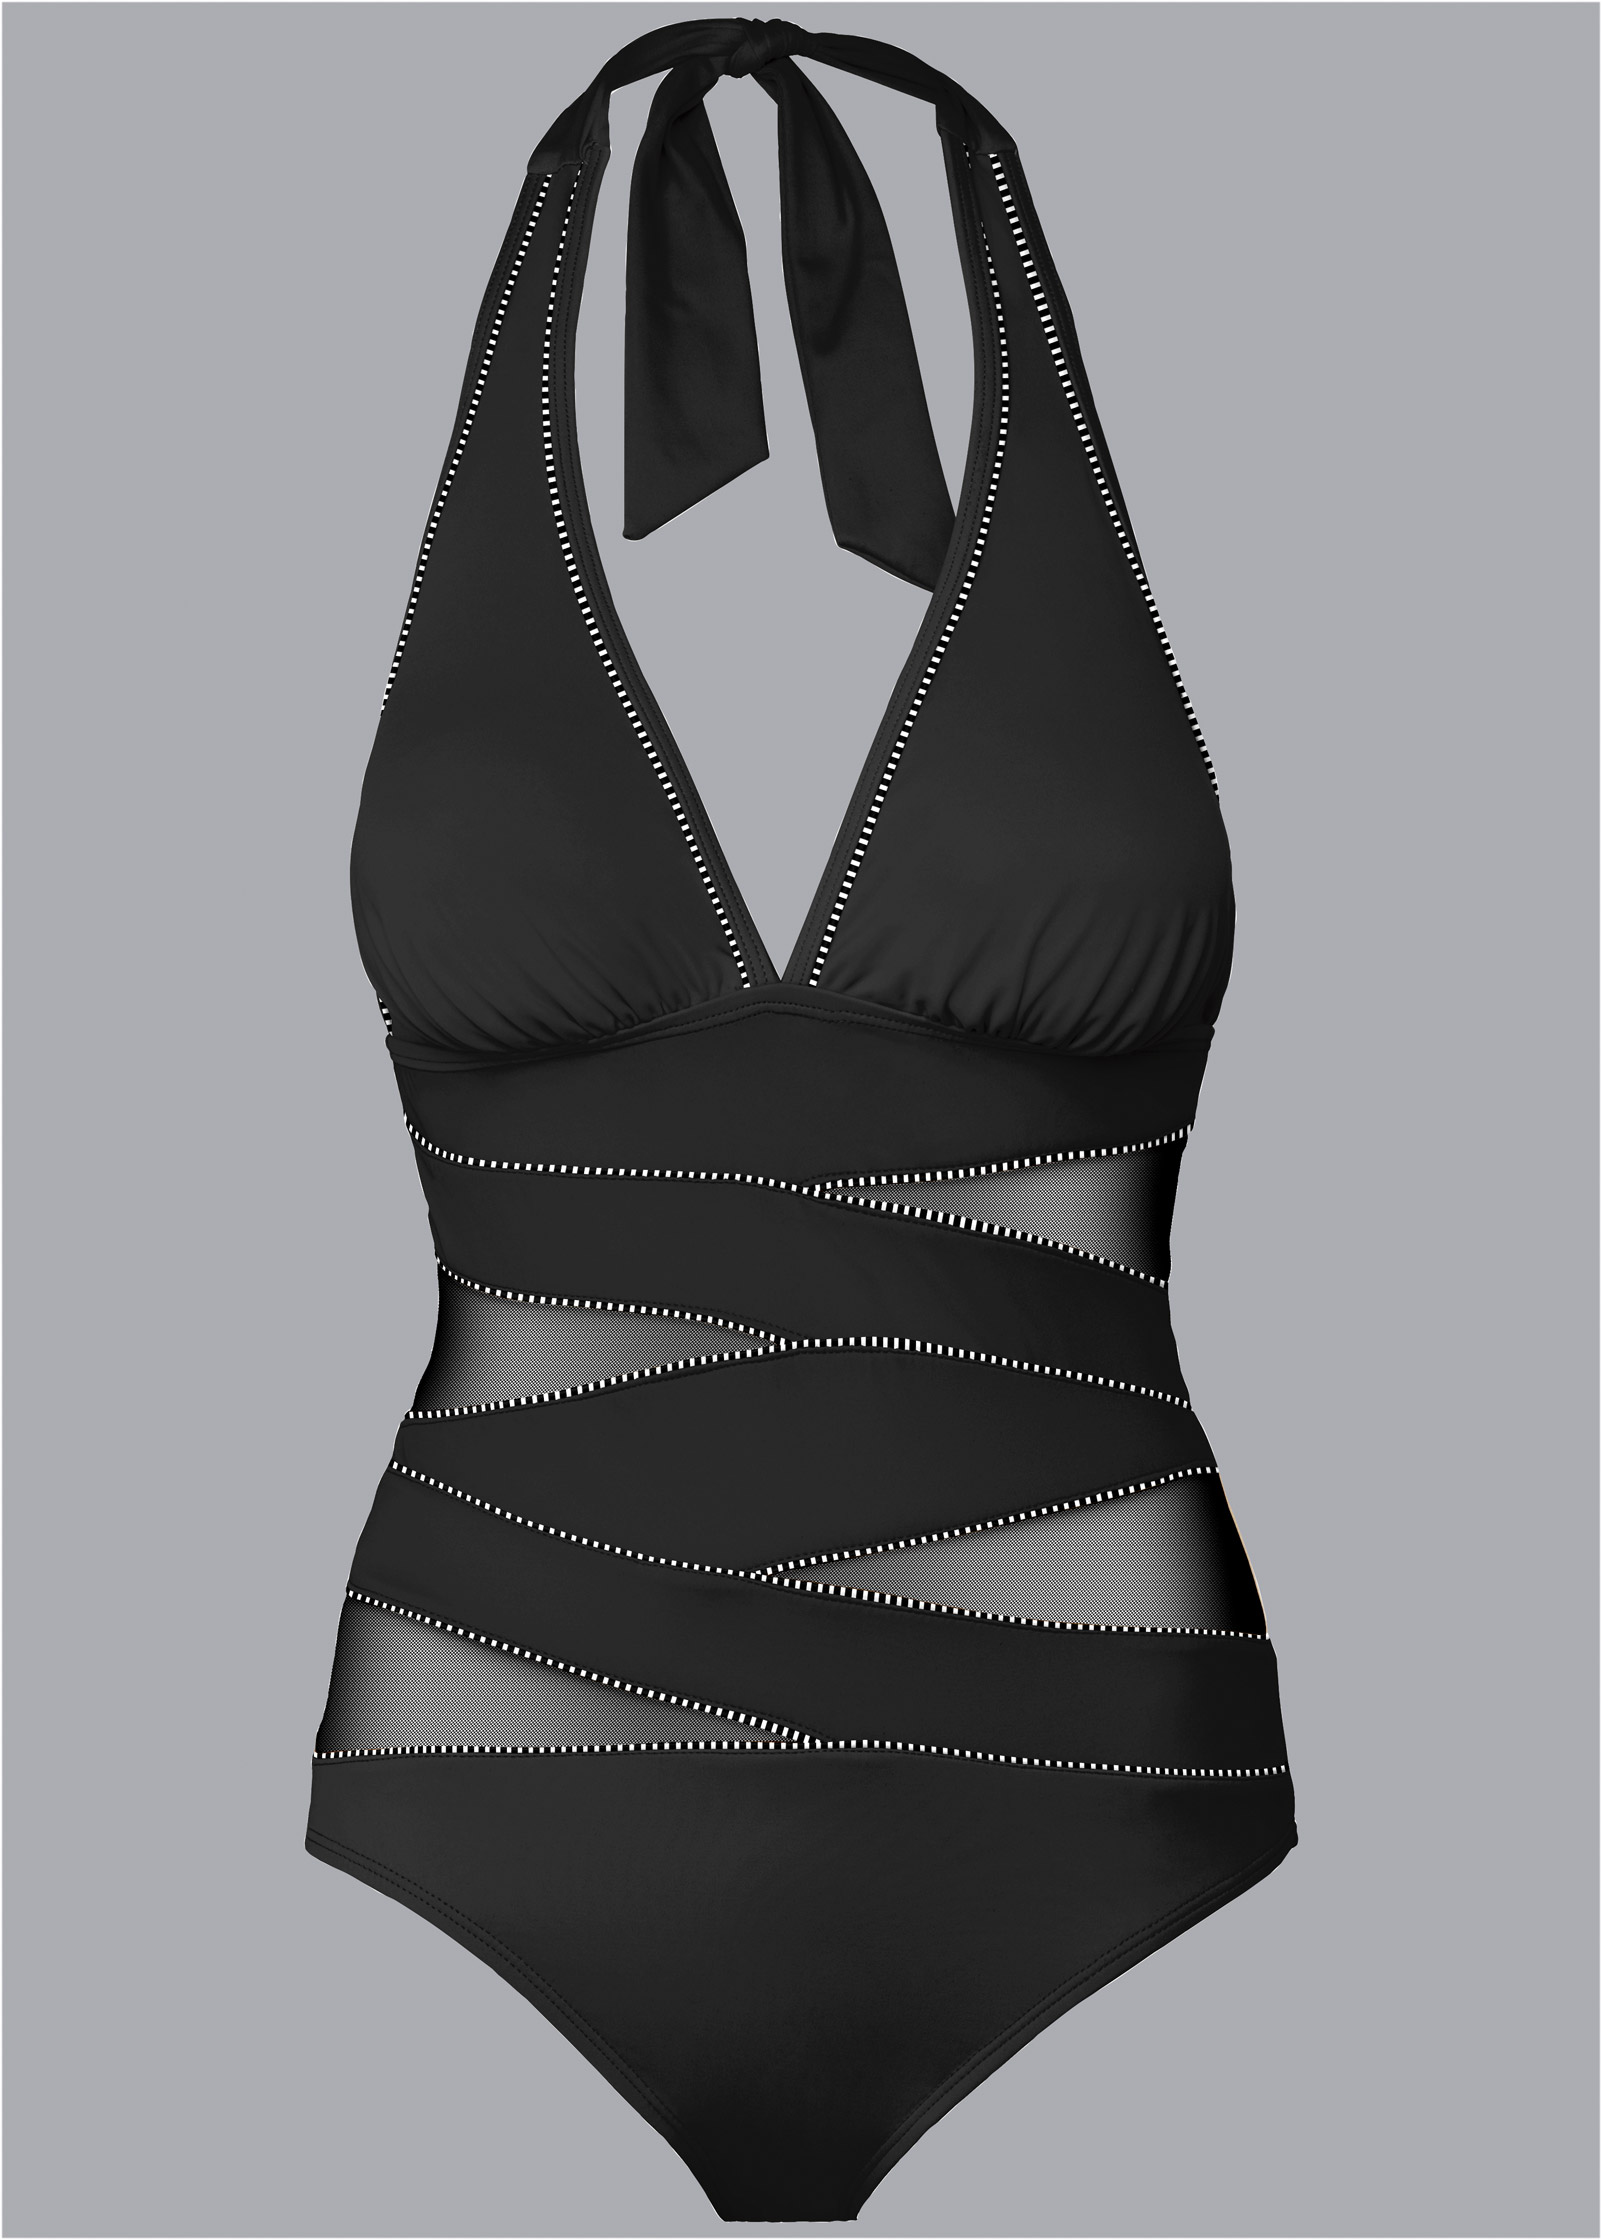 Peek-A-Boo Halter One-Piece Swimsuit in Black & White | VENUS